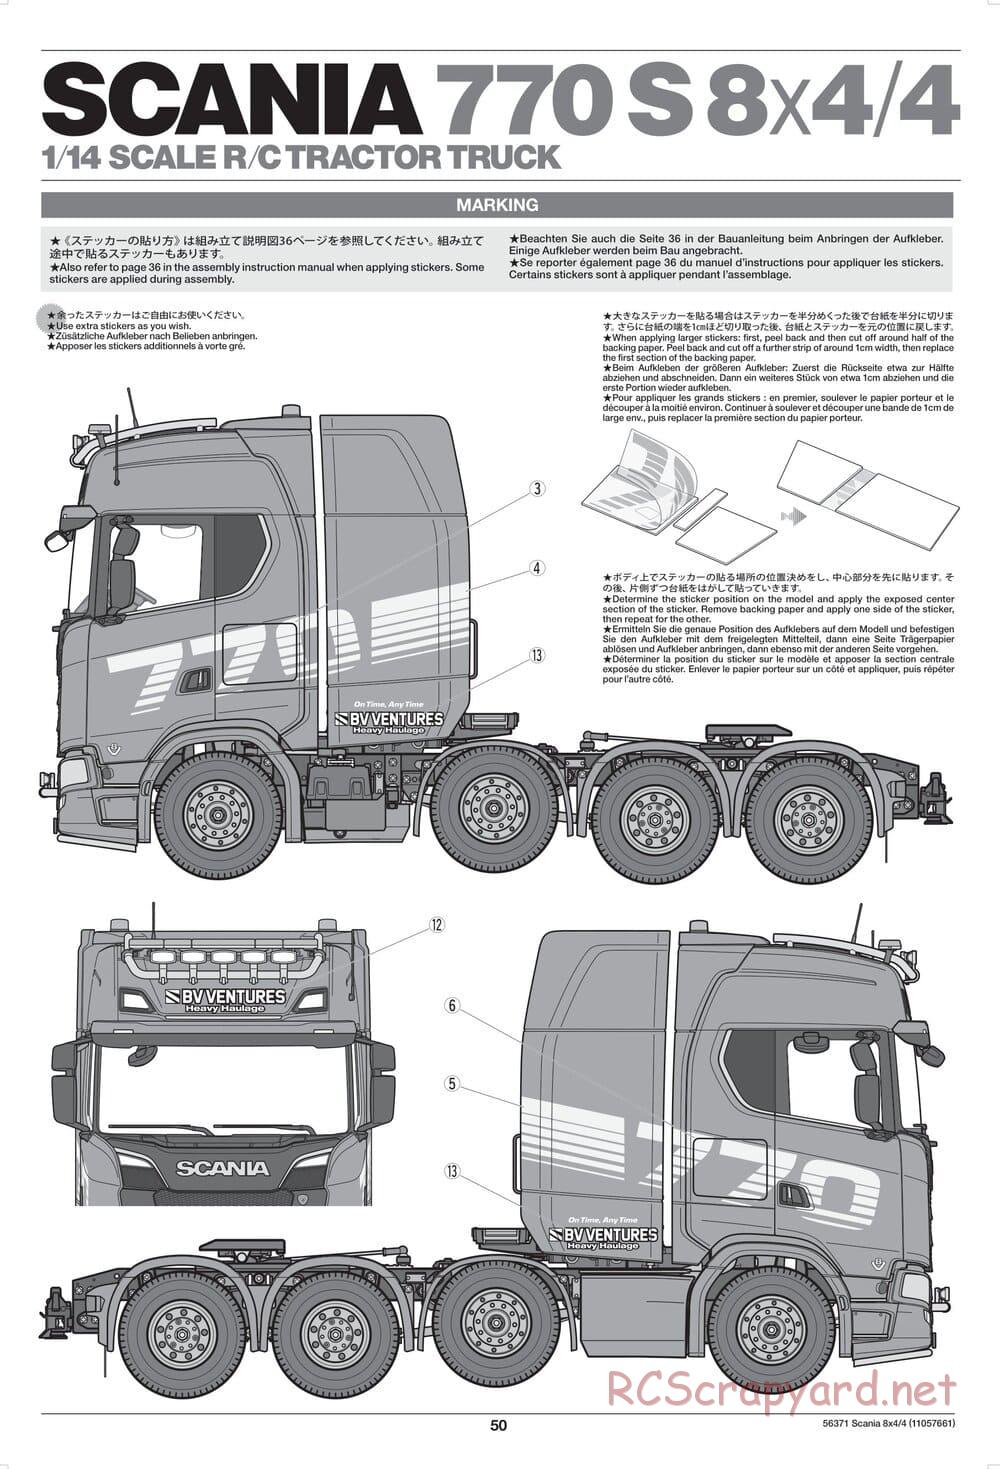 Tamiya - Scania 770 S 8x4/4 Chassis - Manual - Page 50